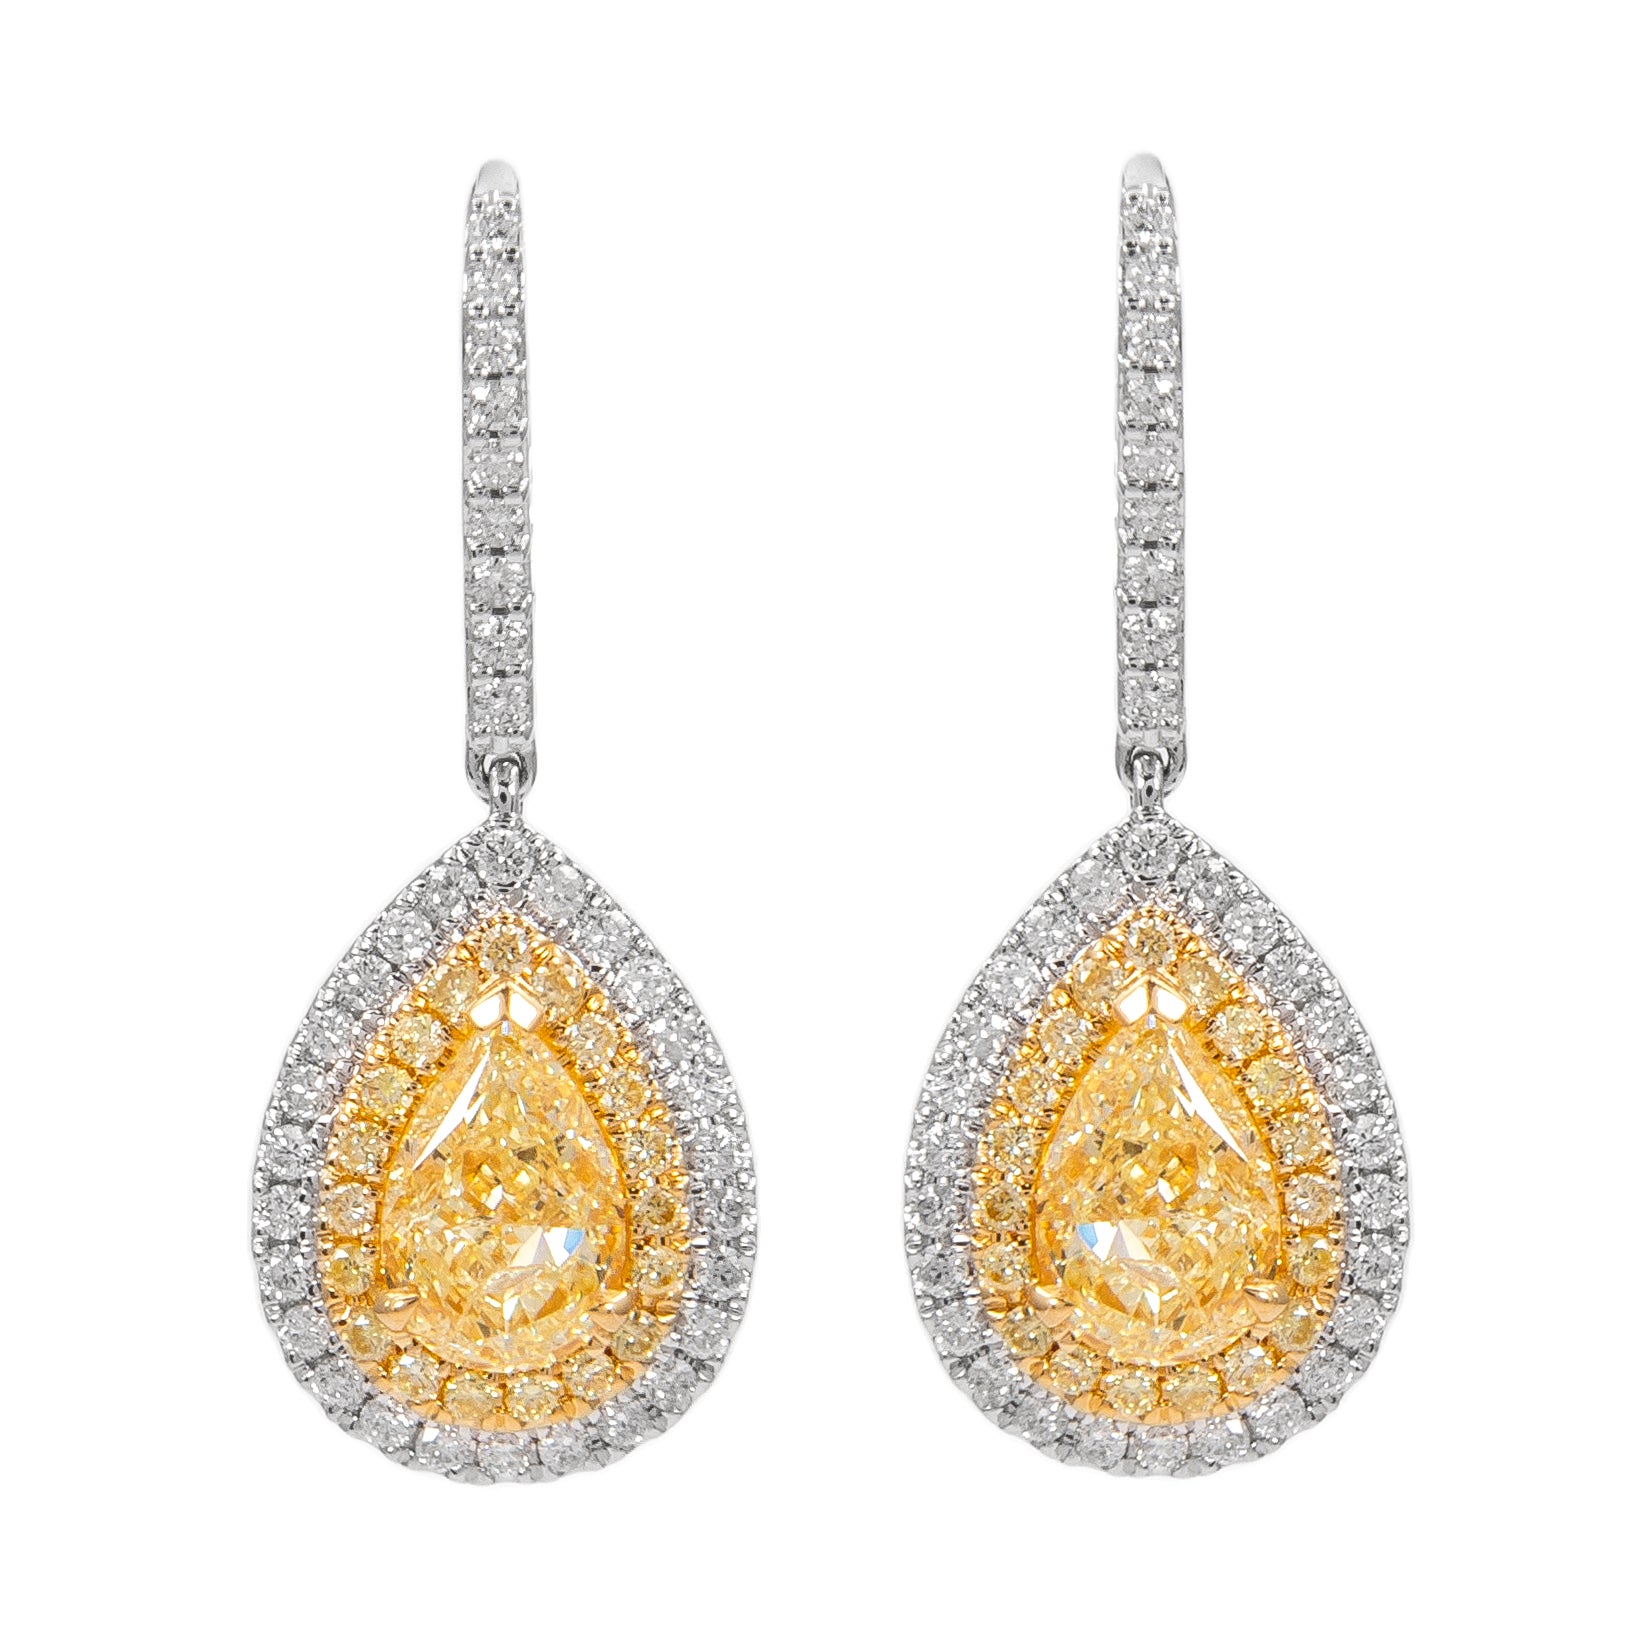 Alexander 2.74ctt Yellow Diamond with Halo Drop Earrings 18k Gold